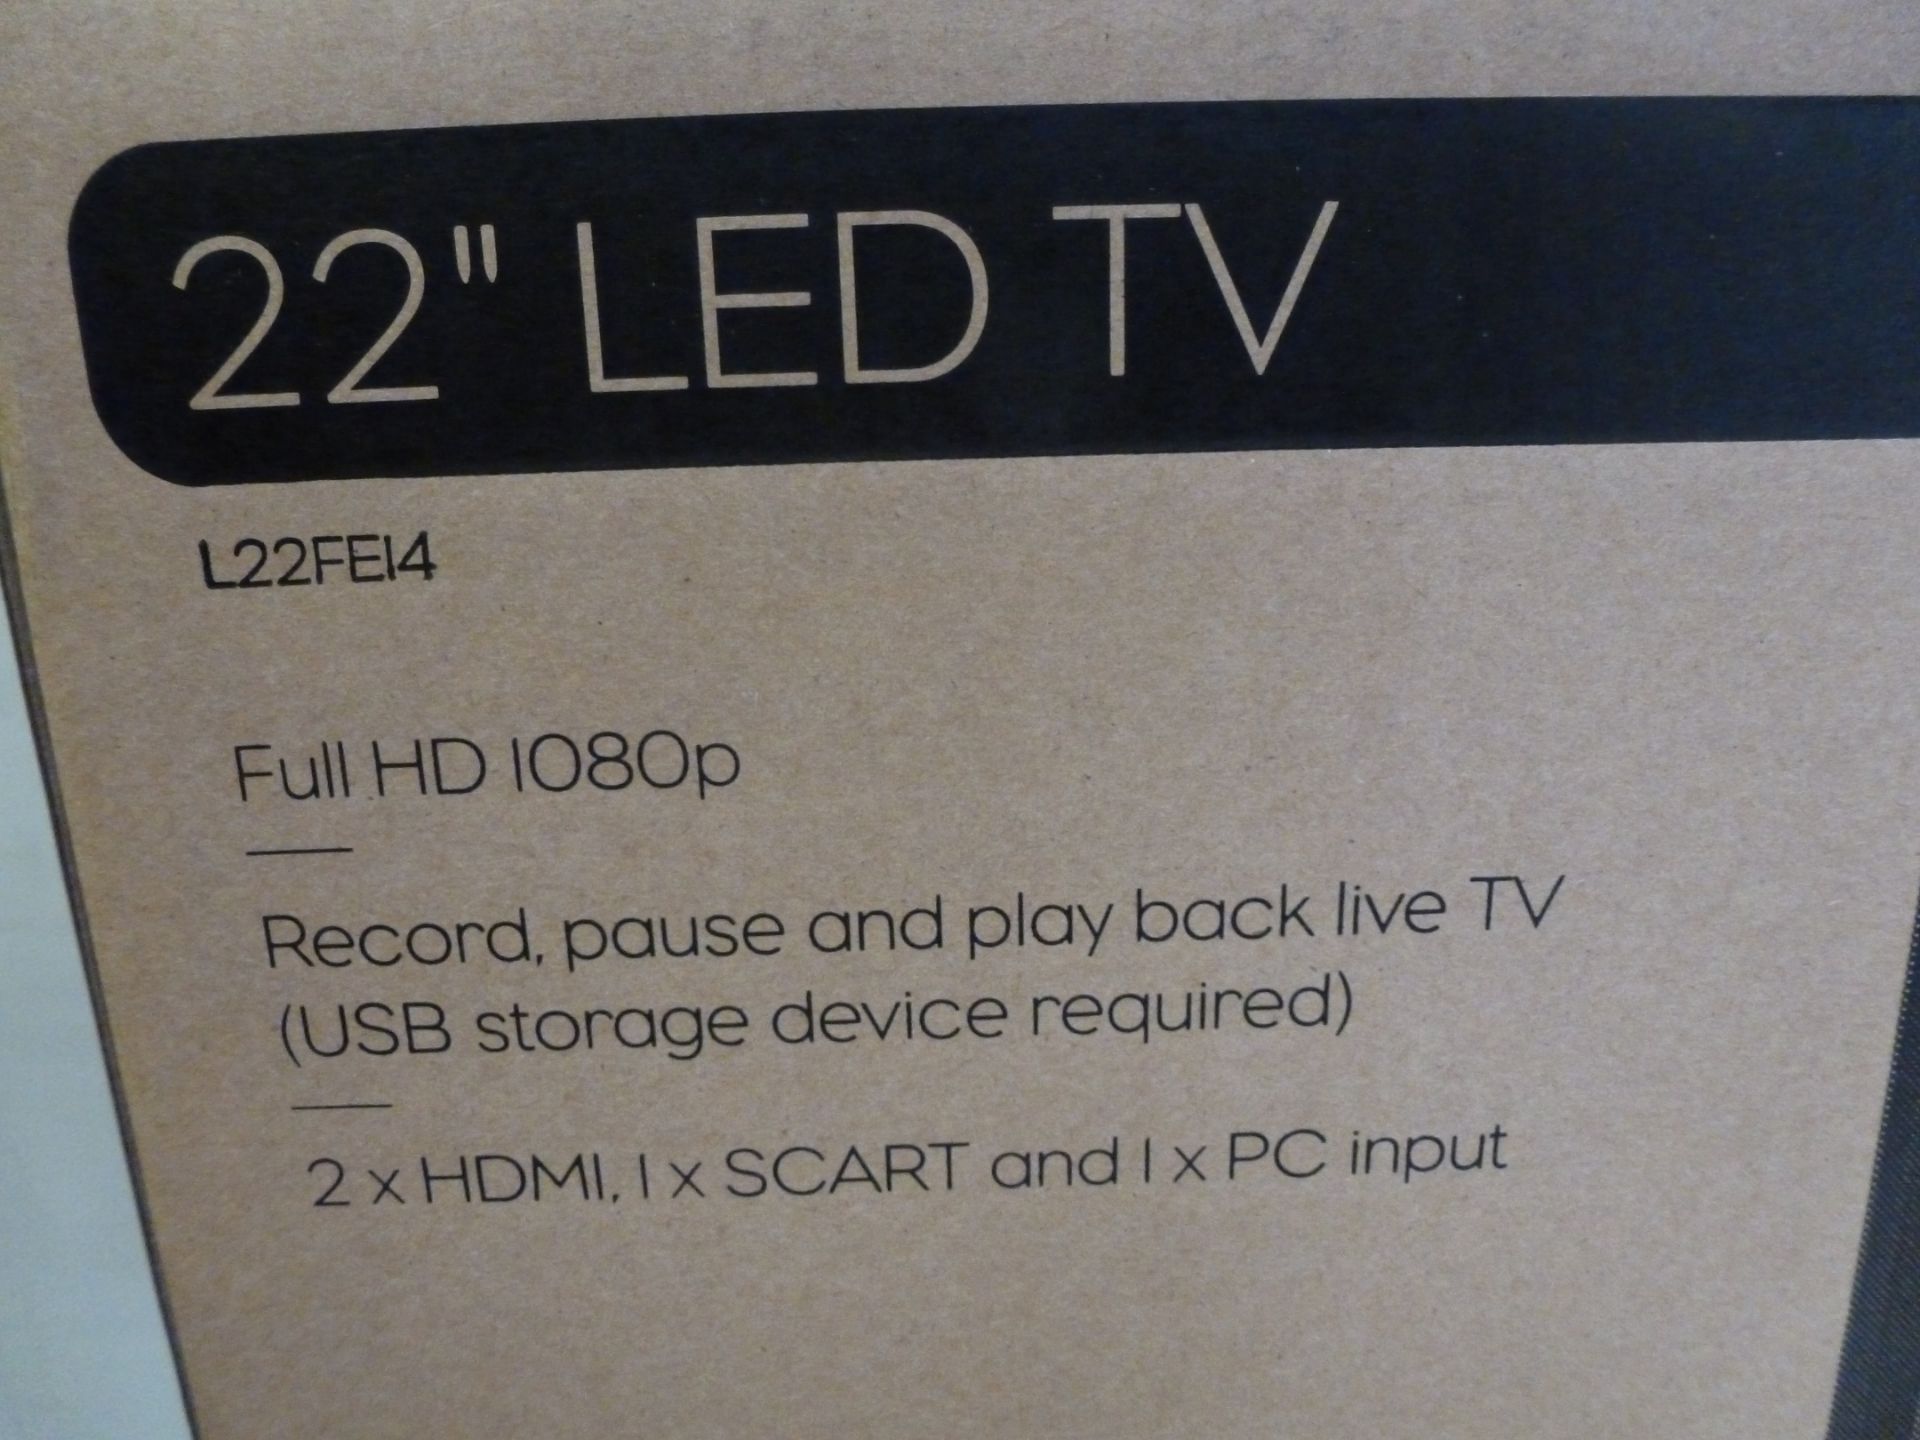 Logik 22" LED TV, Model L22FE14, Full HD 1080p. New & Boxed. - Image 2 of 2